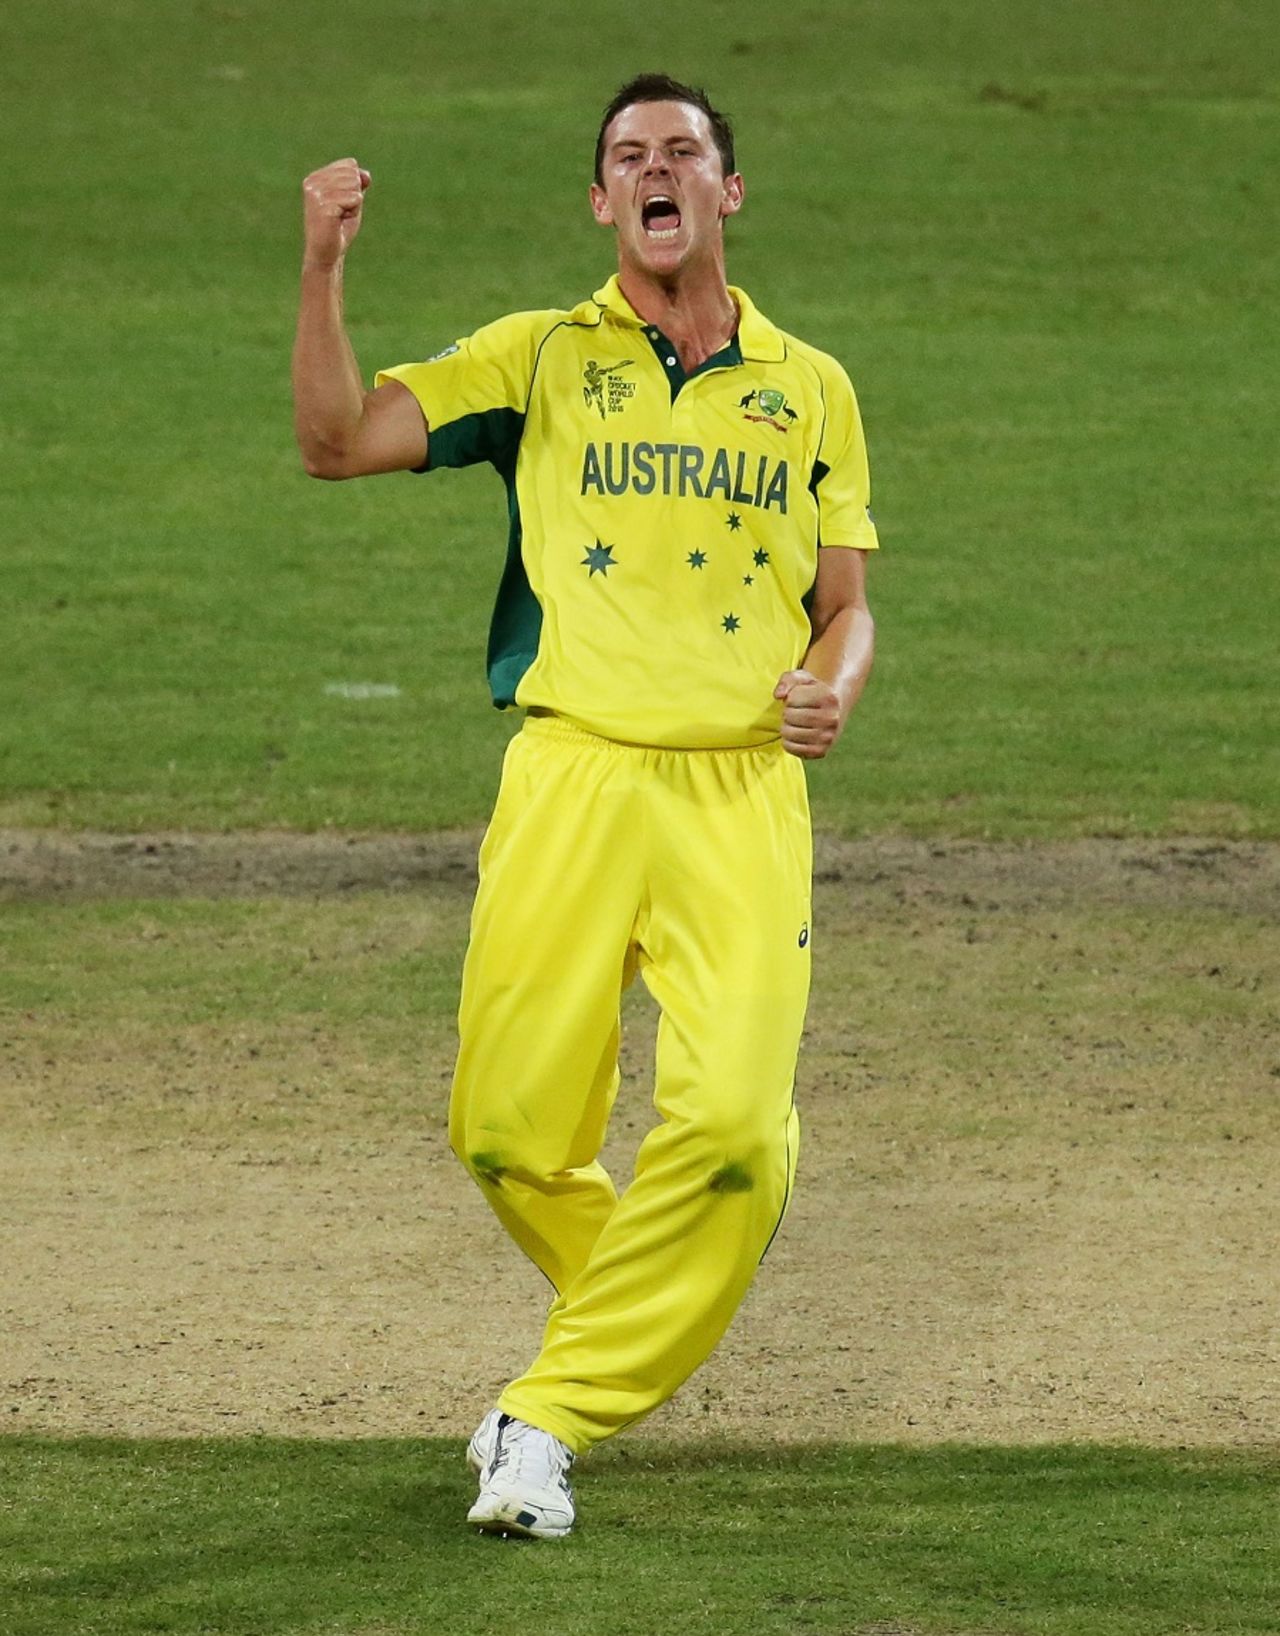 Josh Hazlewood is pumped after dismissing Shikhar Dhawan, Australia v India, World Cup 2015, 2nd semi-final, Sydney, March 26, 2015